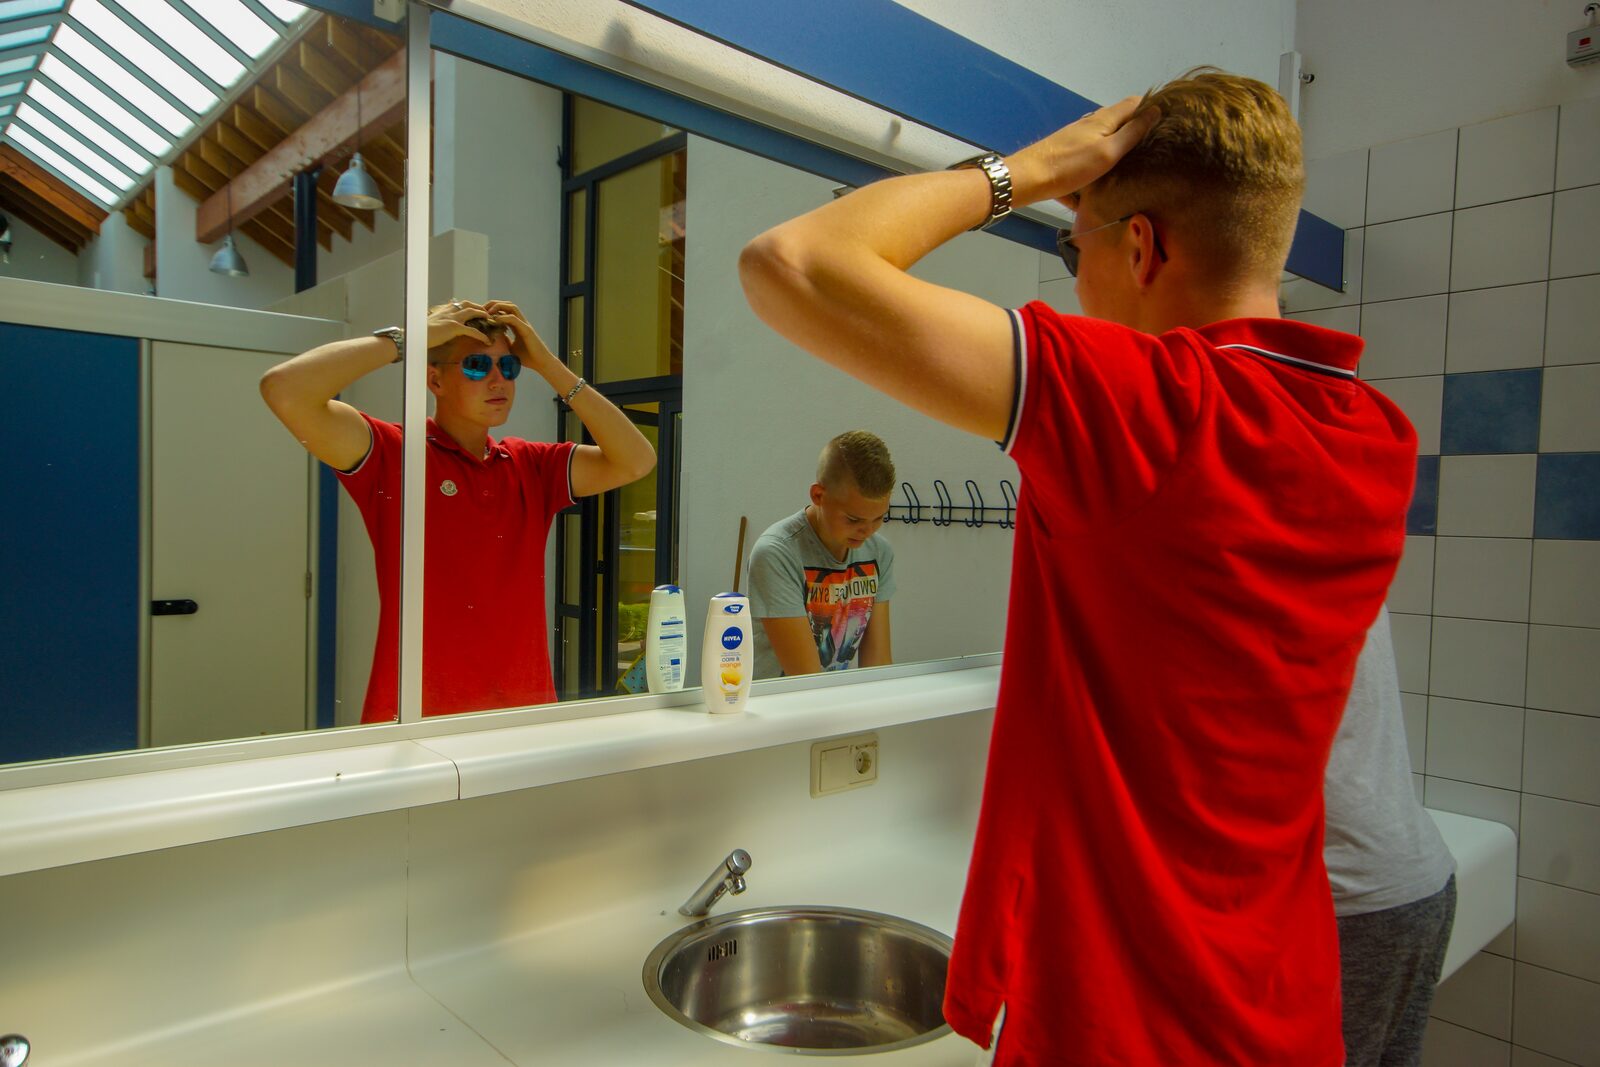 Sanitary facilities Walsdorf boys in front of mirror